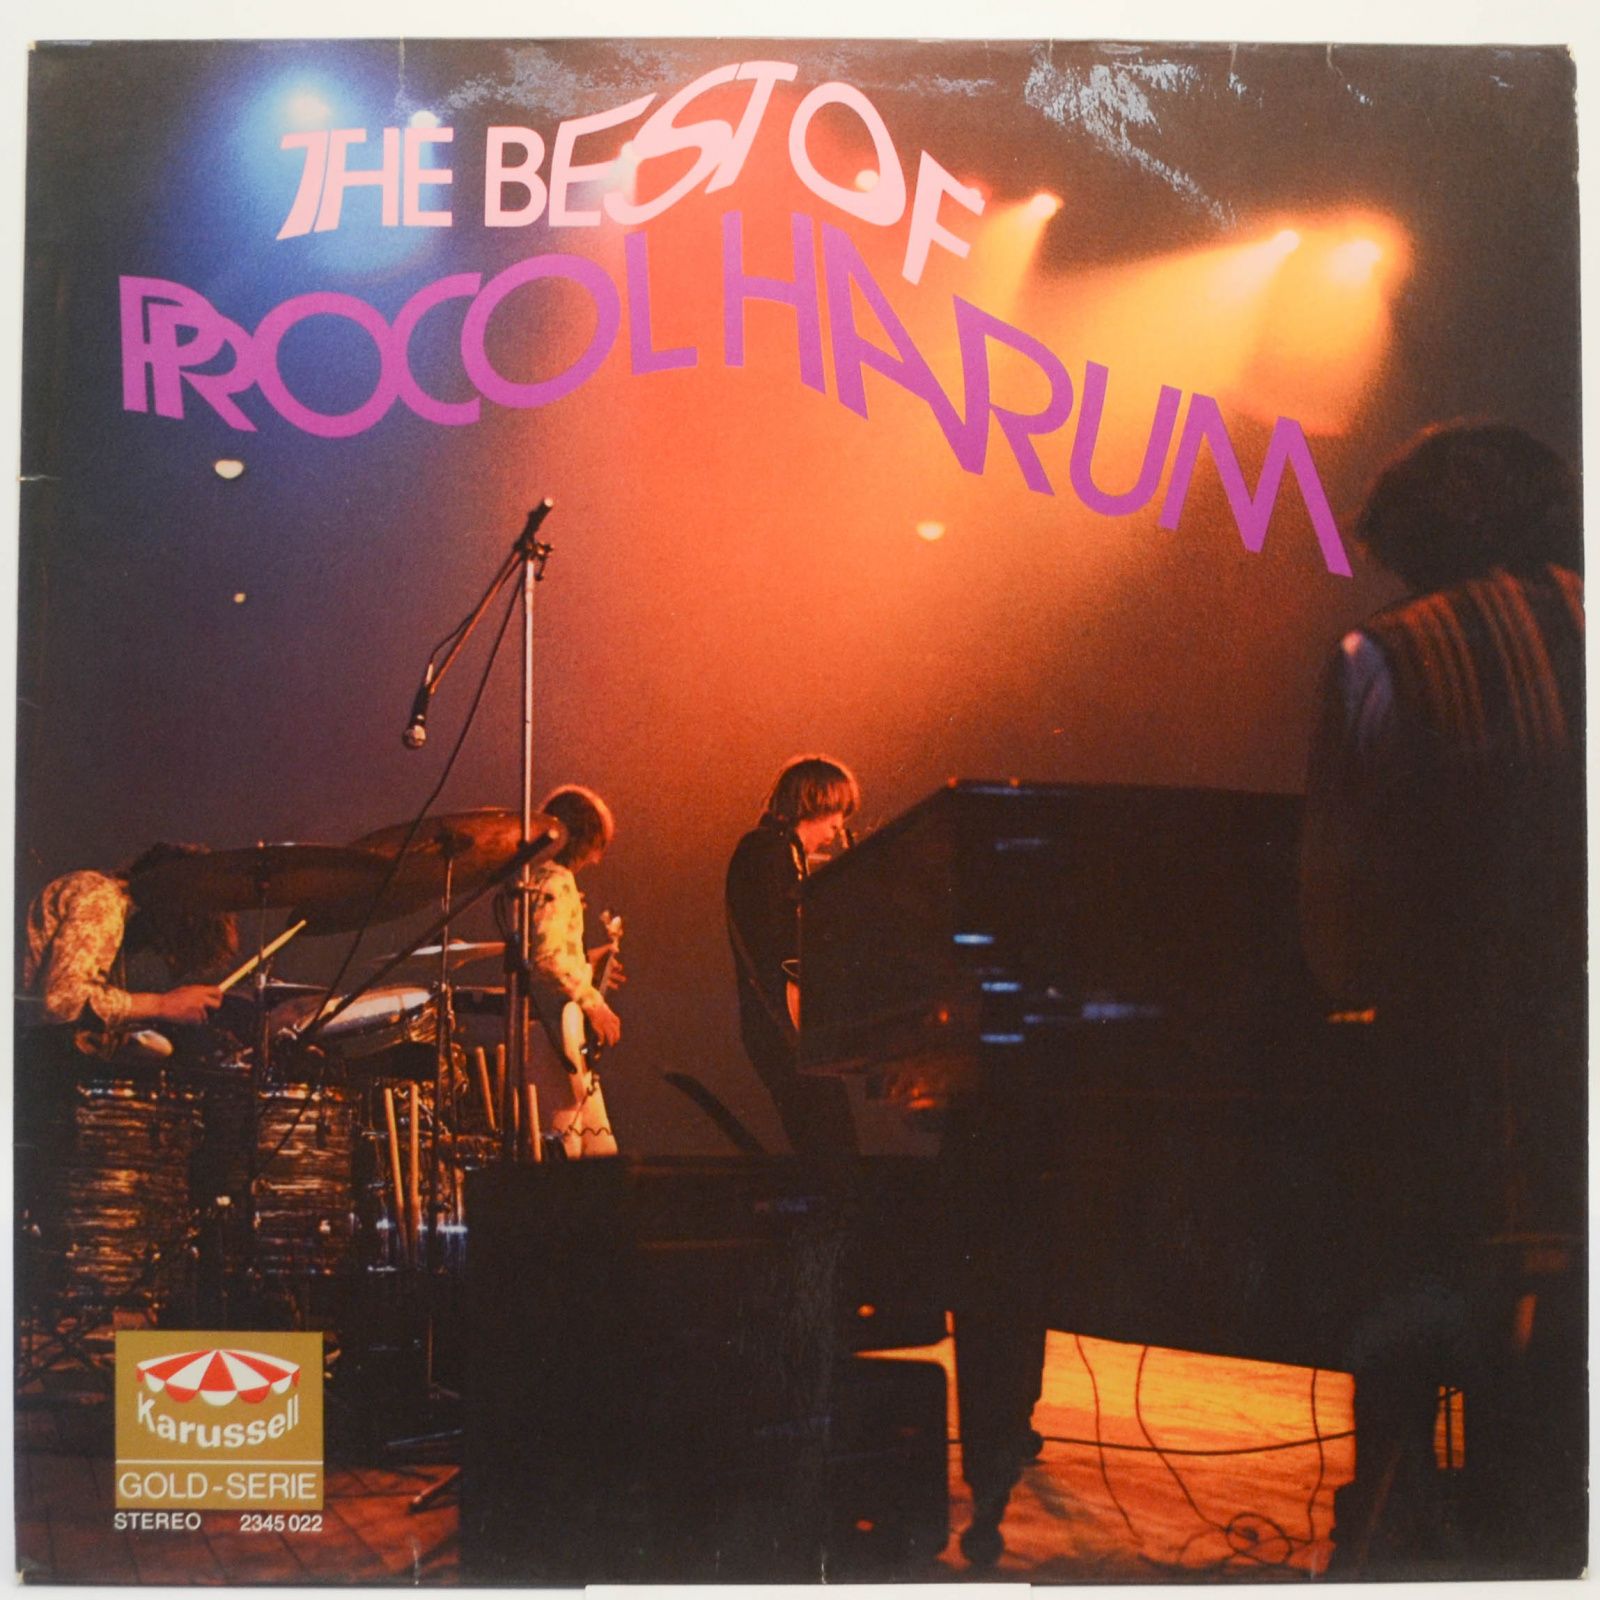 The Best Of Procol Harum, 1971